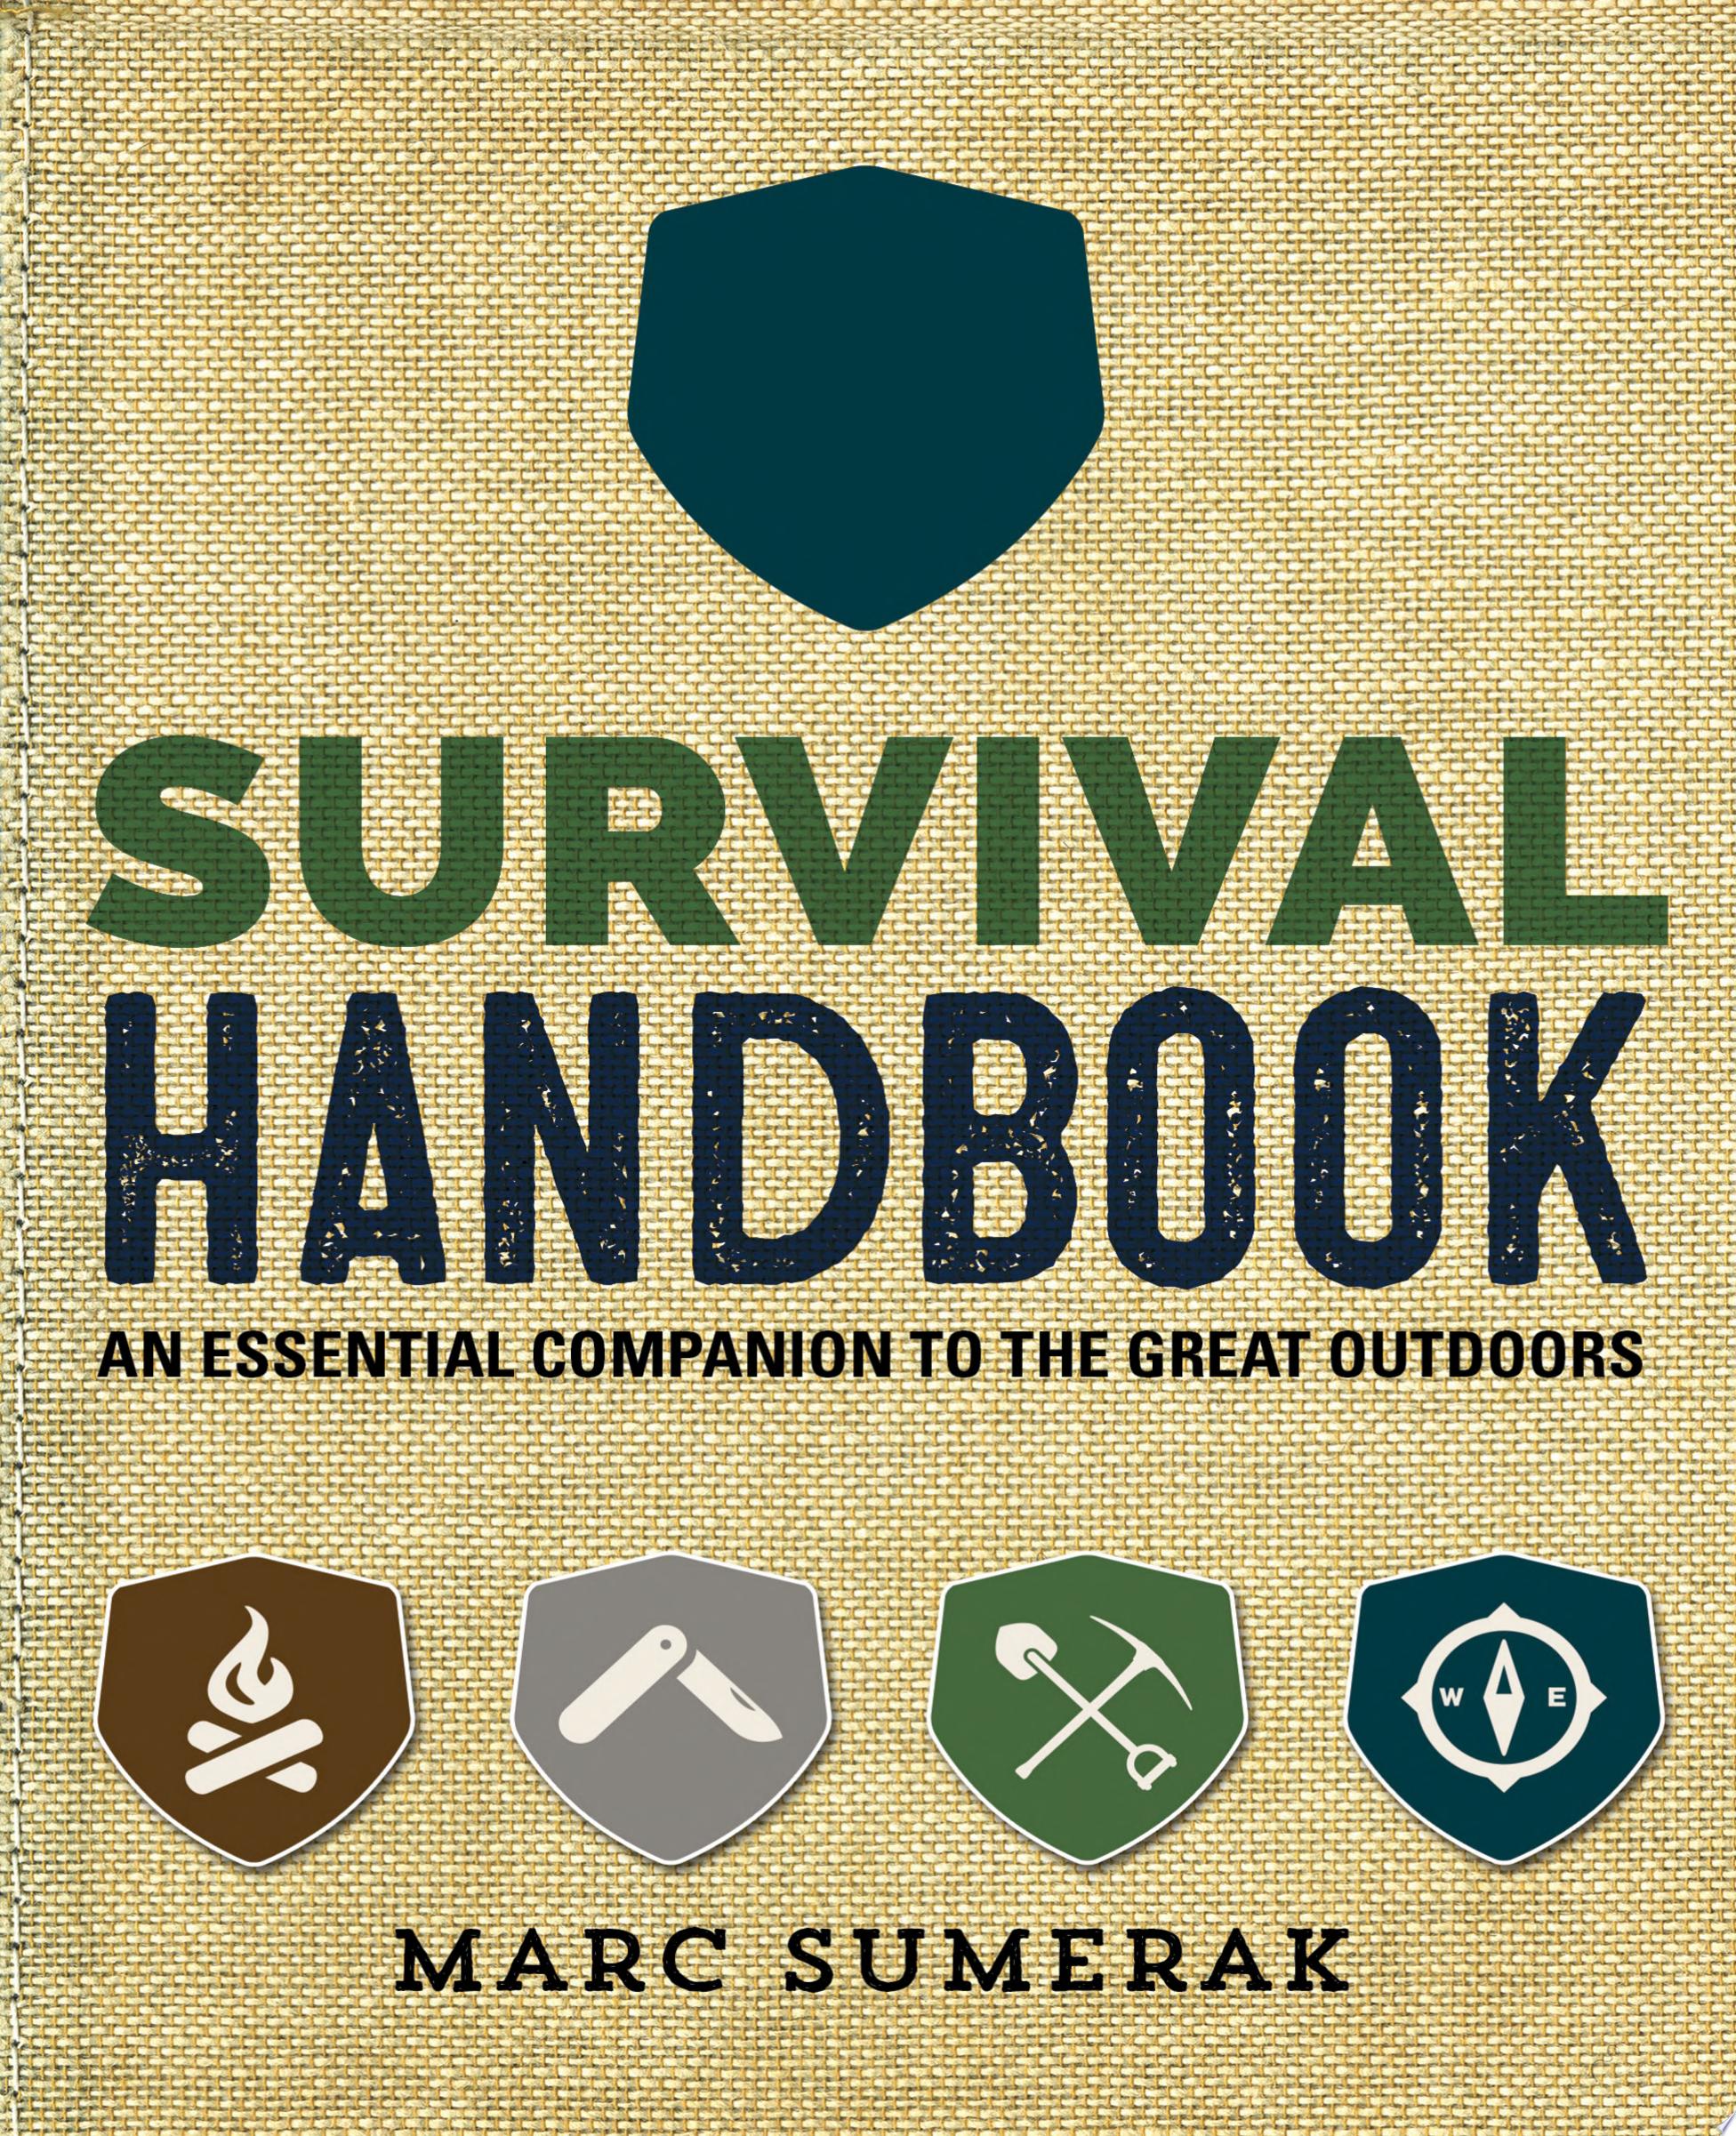 Image for "Survival Handbook"